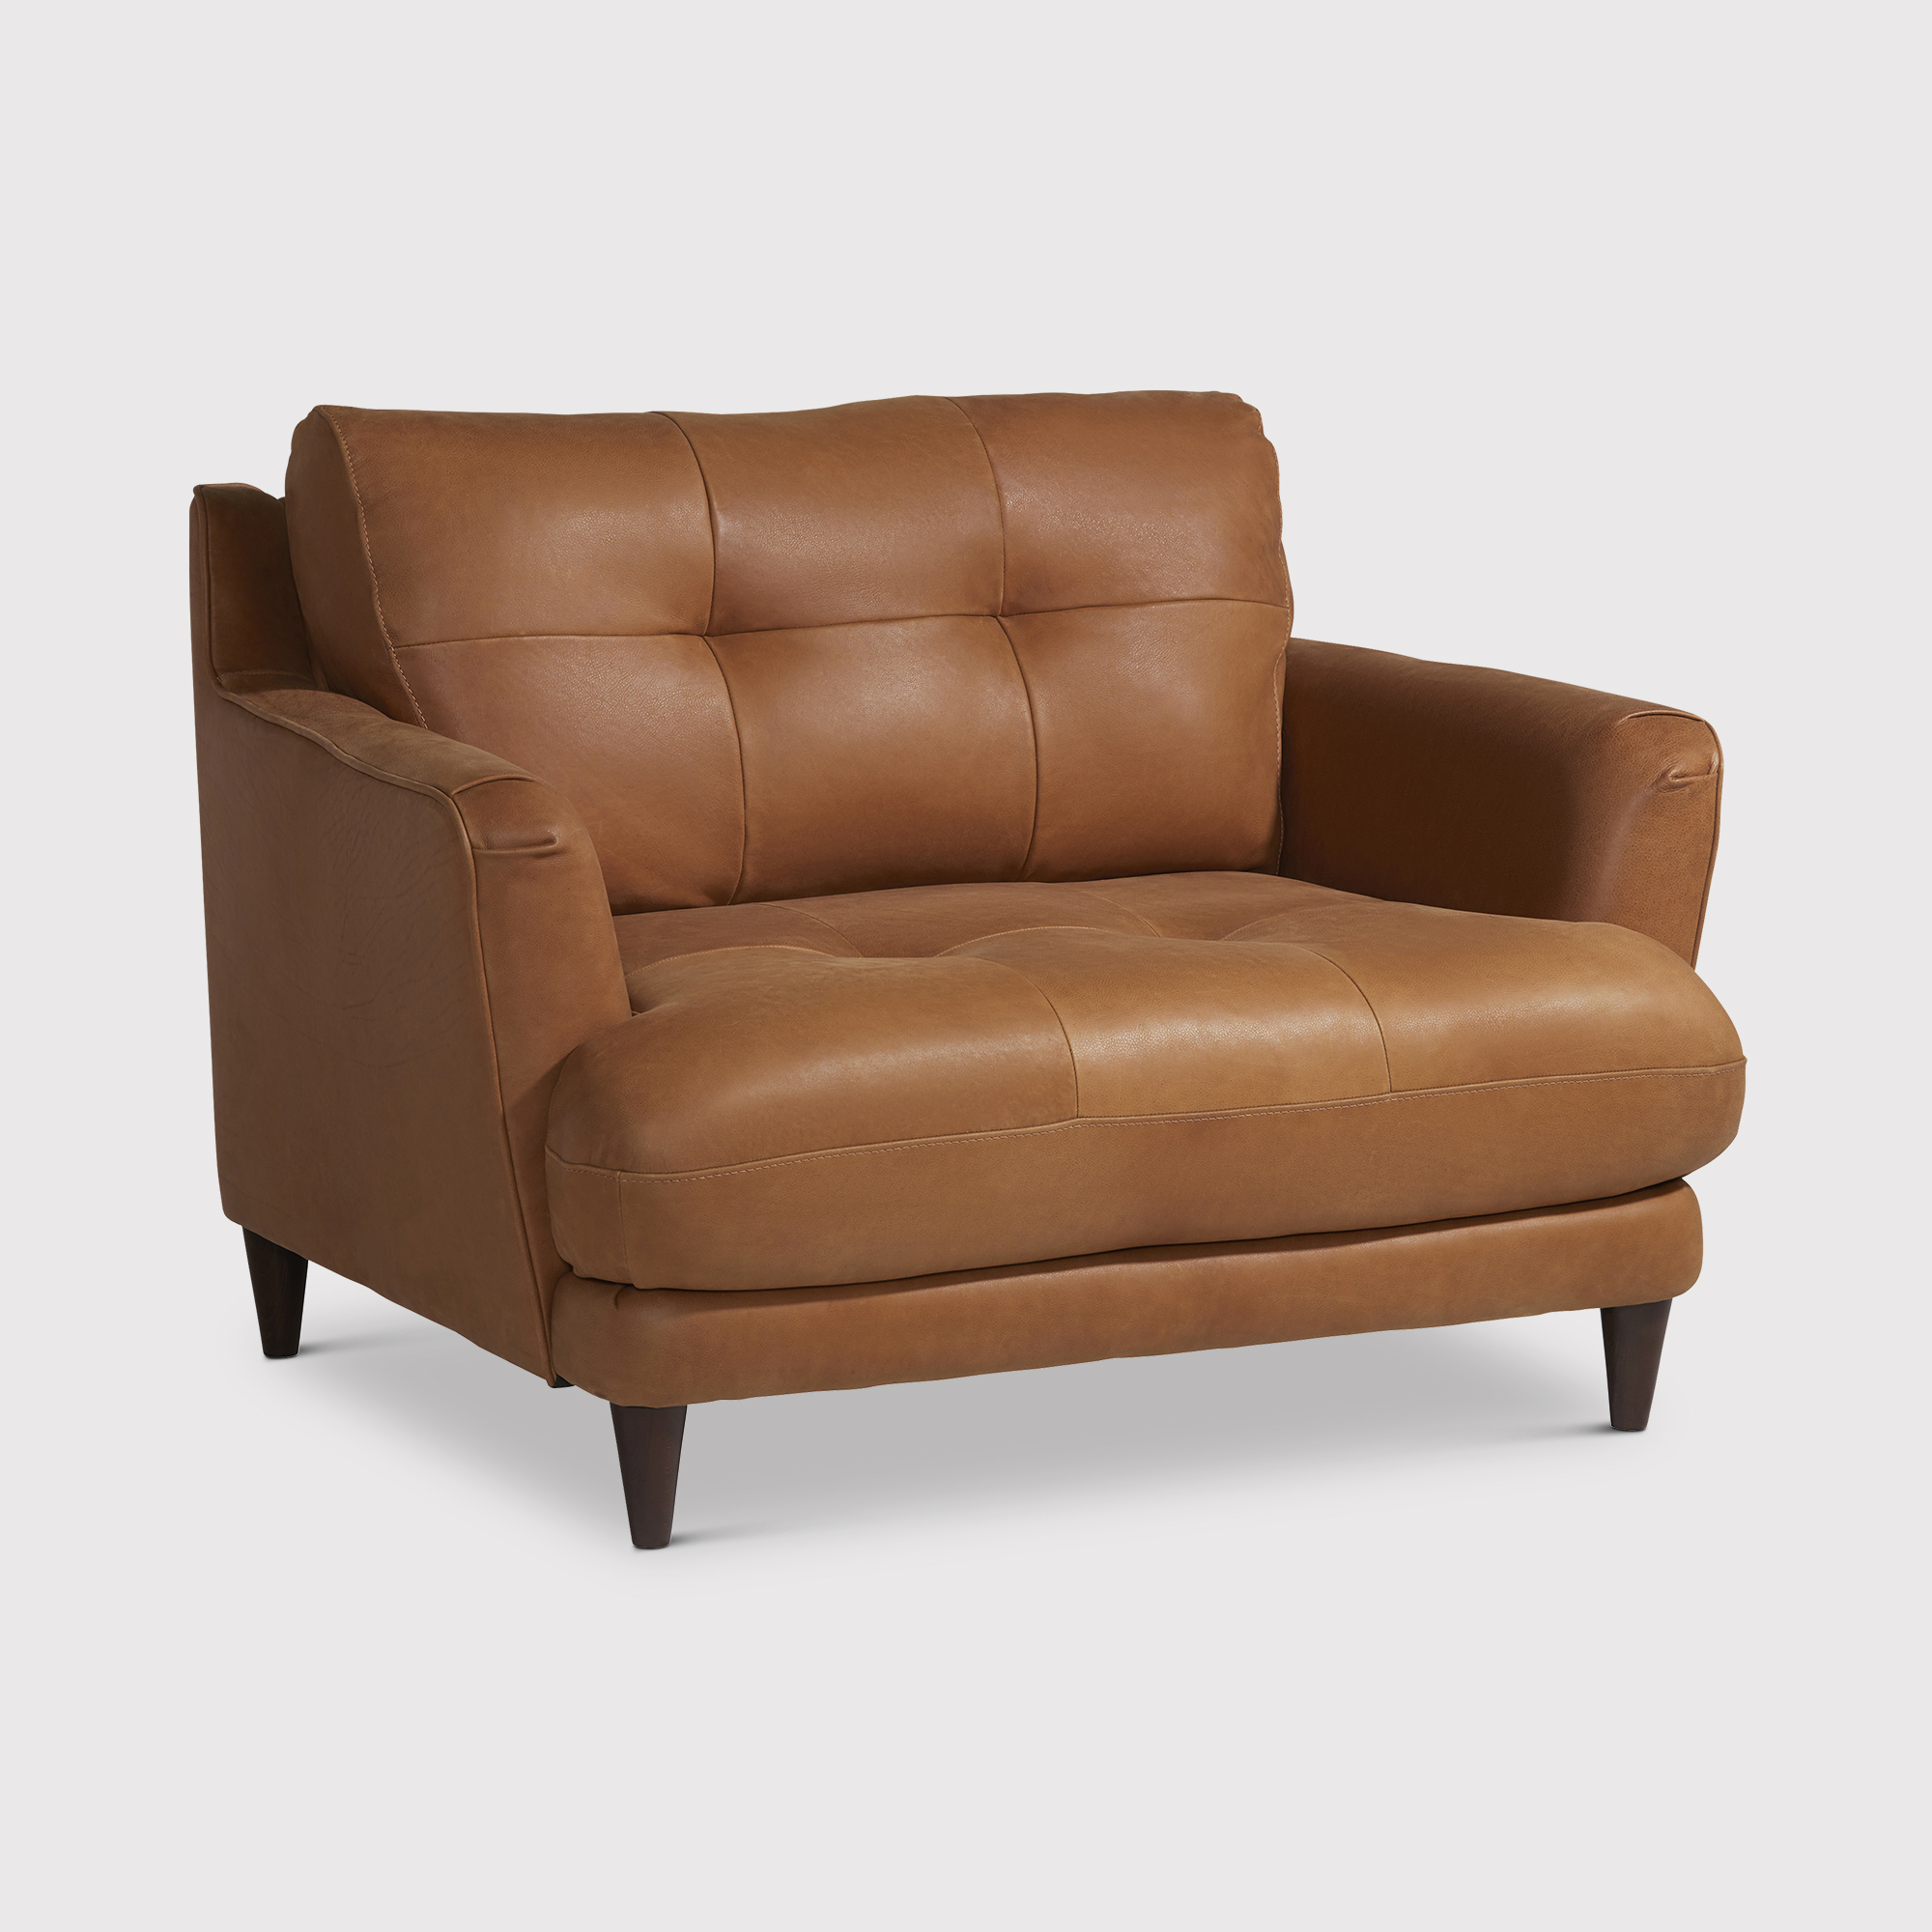 Aldo Maxi Armchair, Brown Leather | Barker & Stonehouse